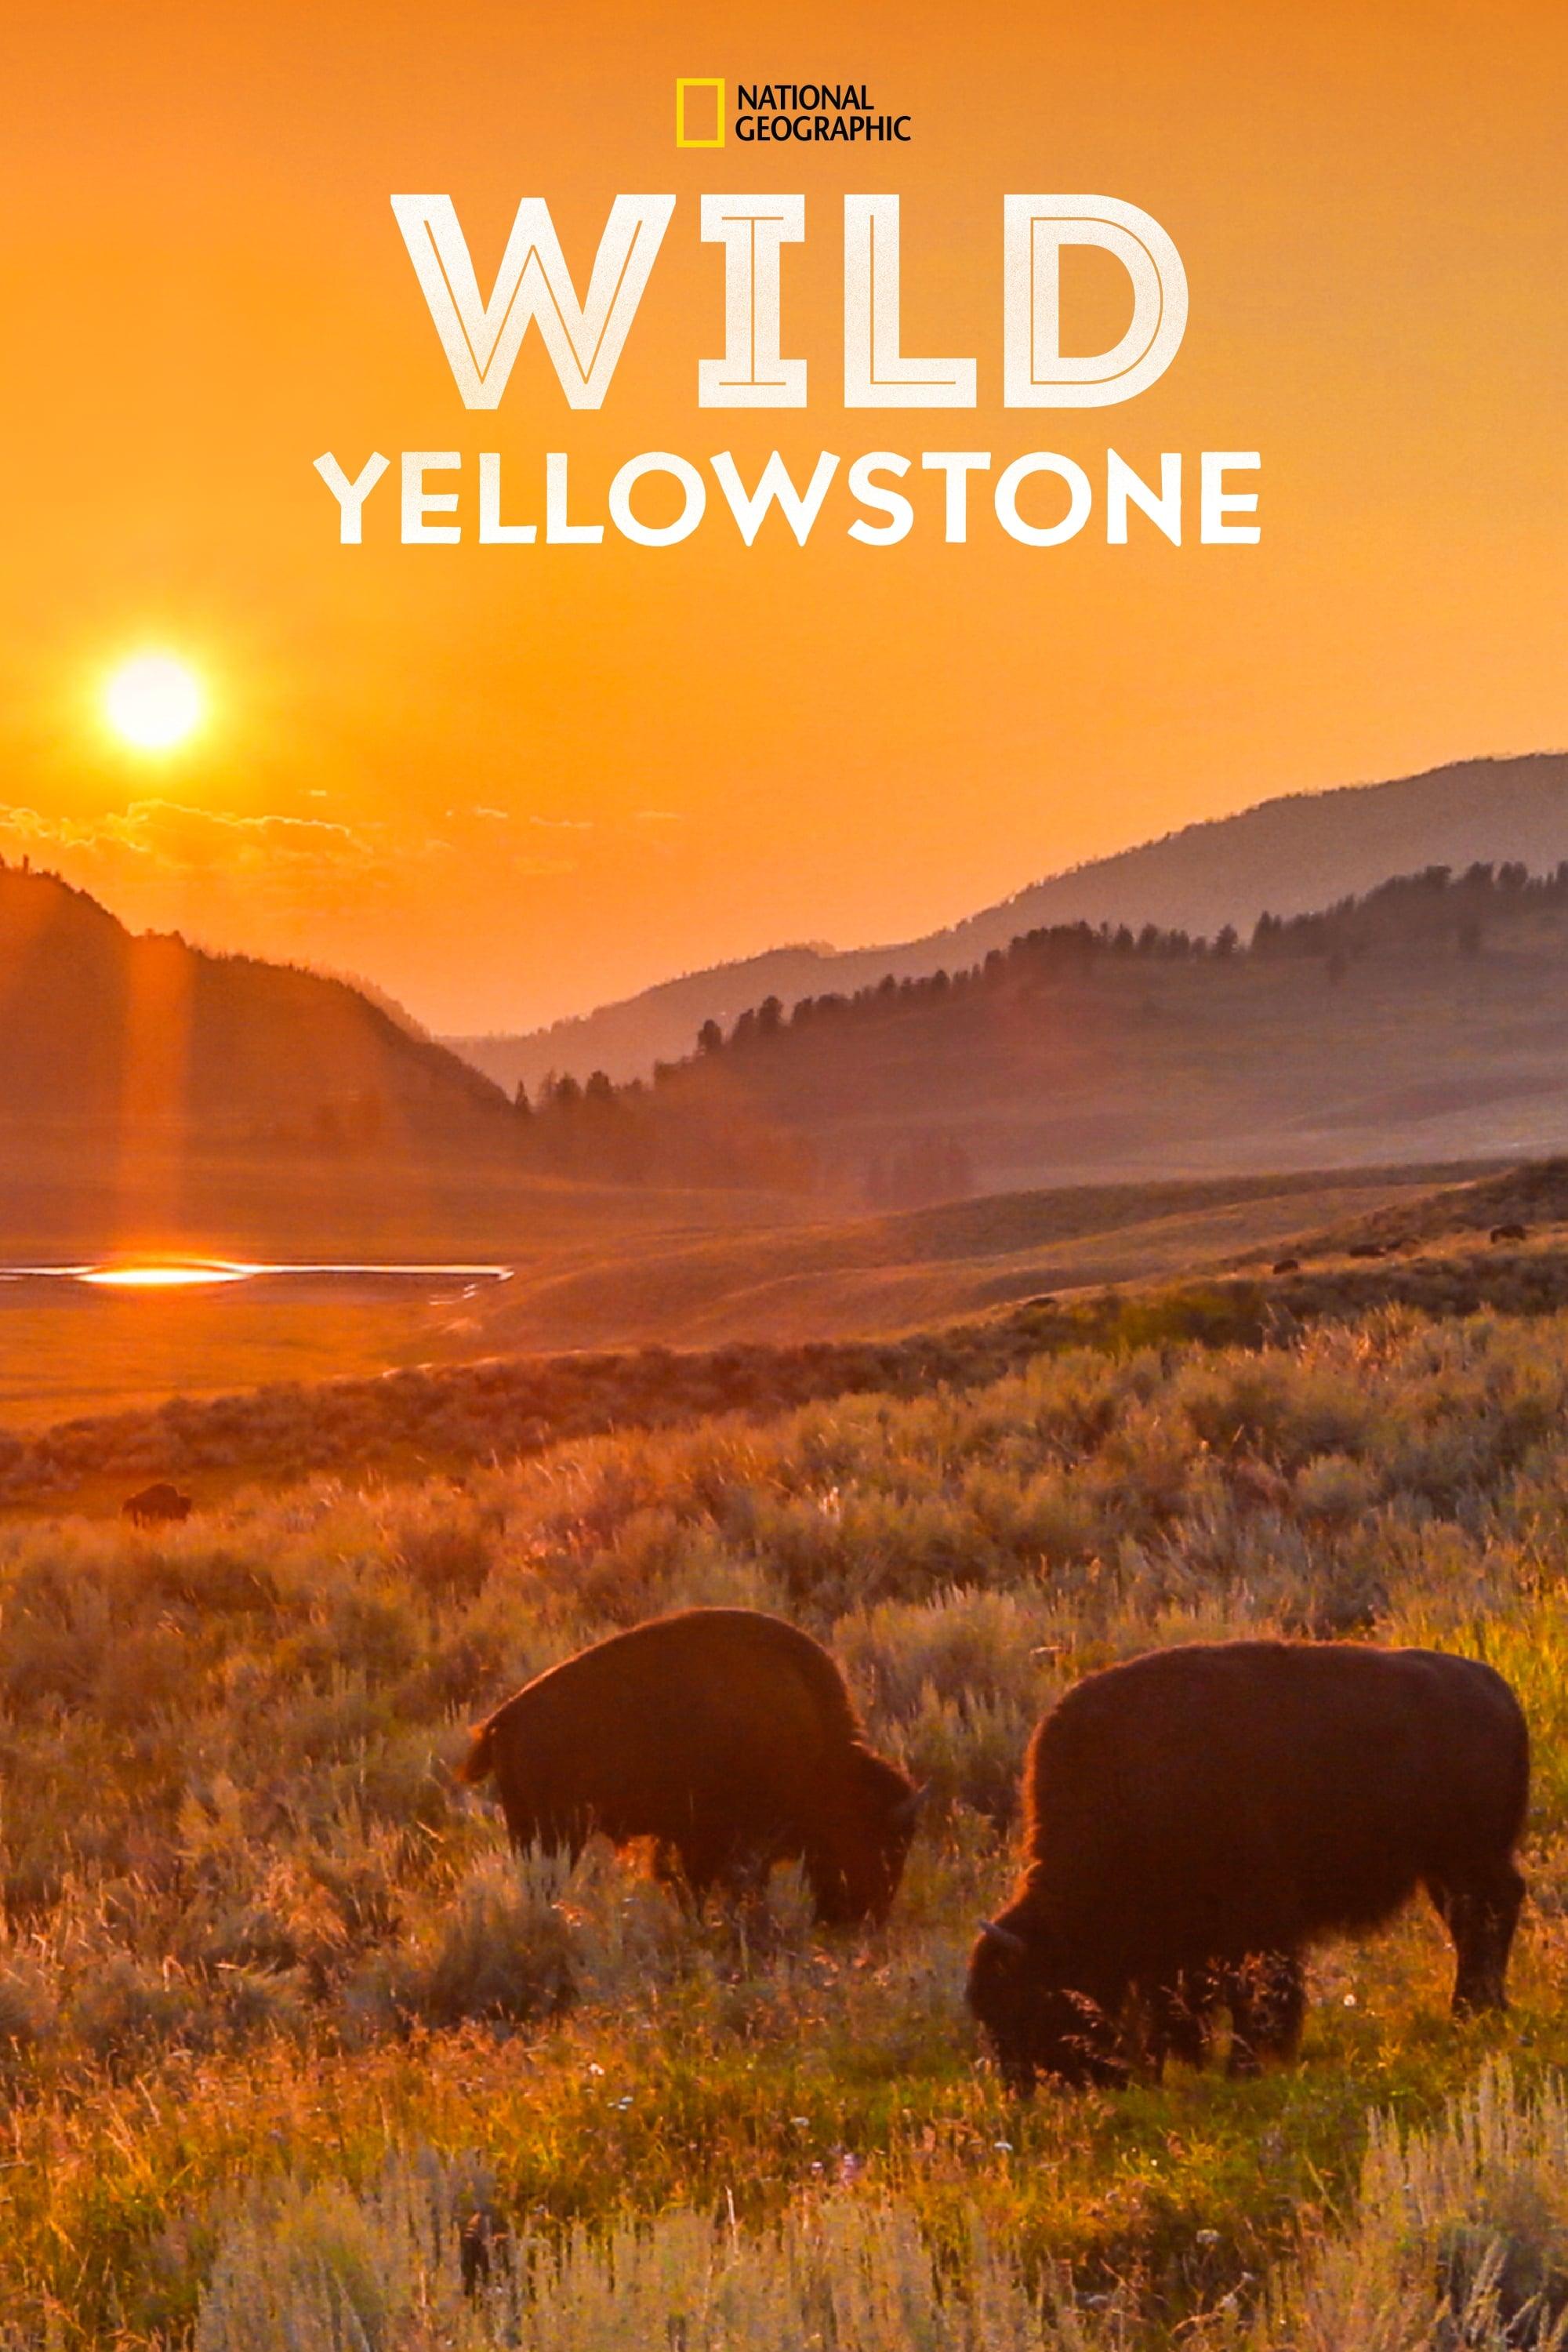 Wild Yellowstone poster